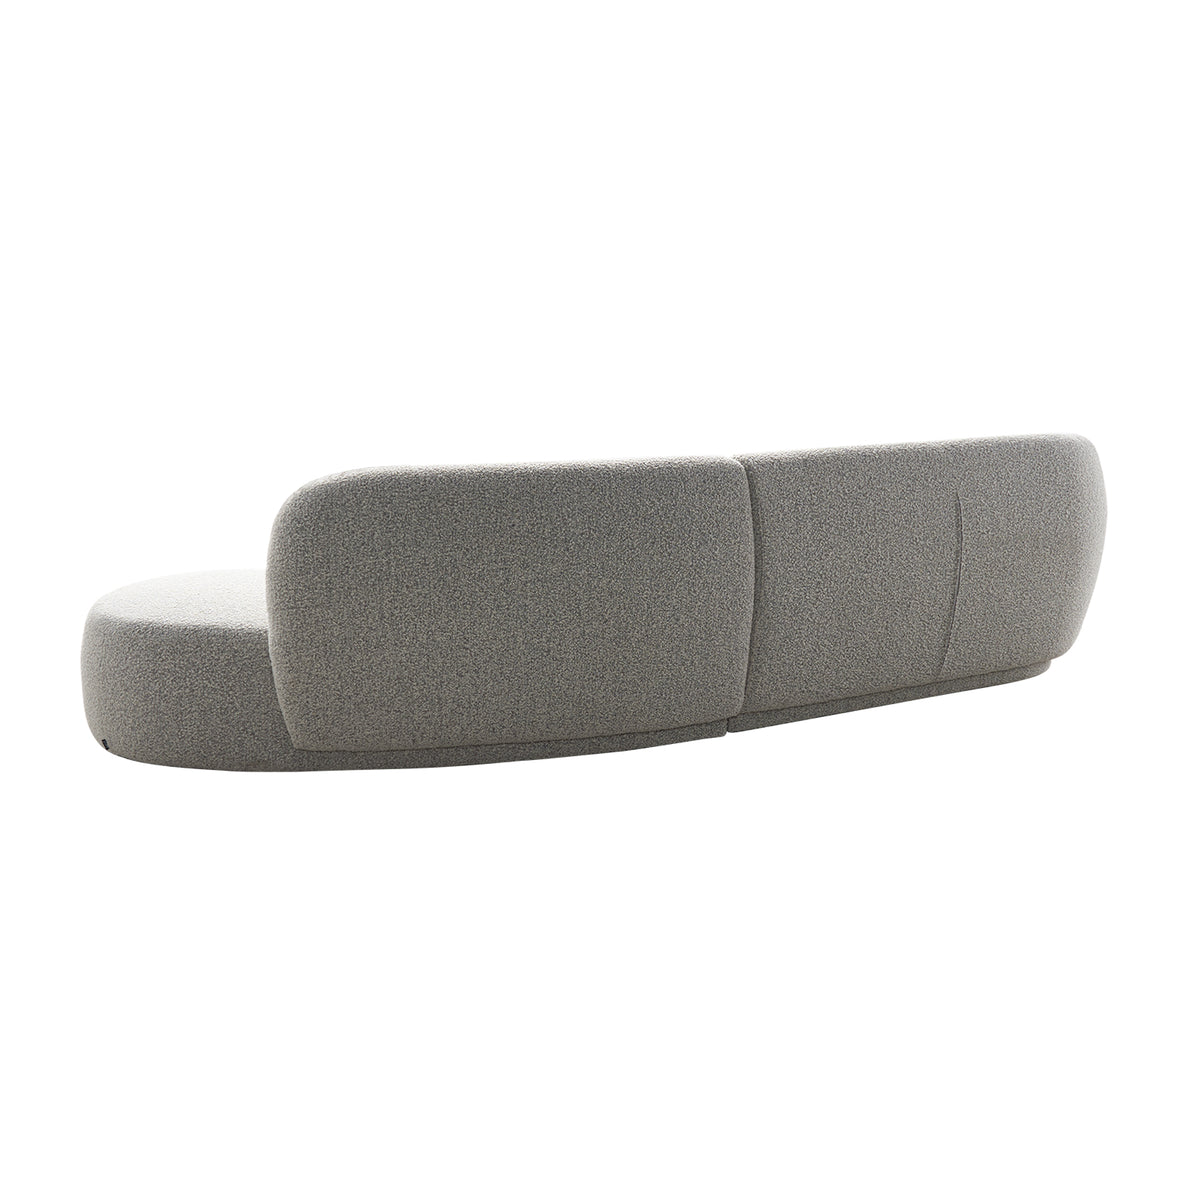 Swell Sofa Curve